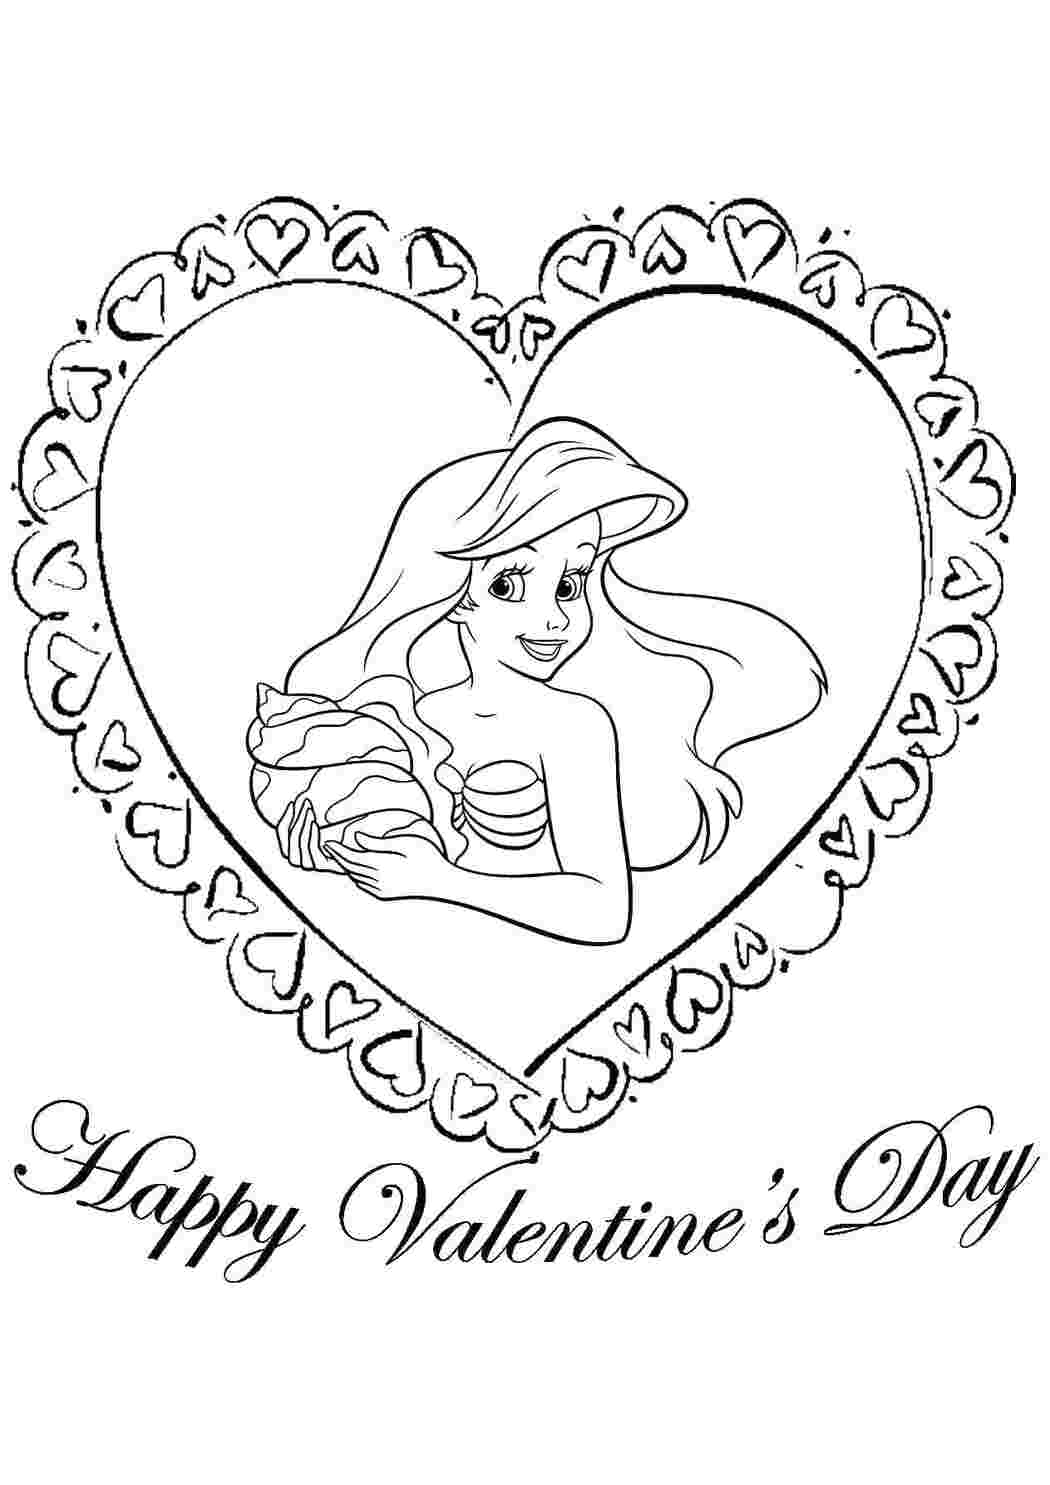 Раскраски ко дню Святого Валентина 14 февраля